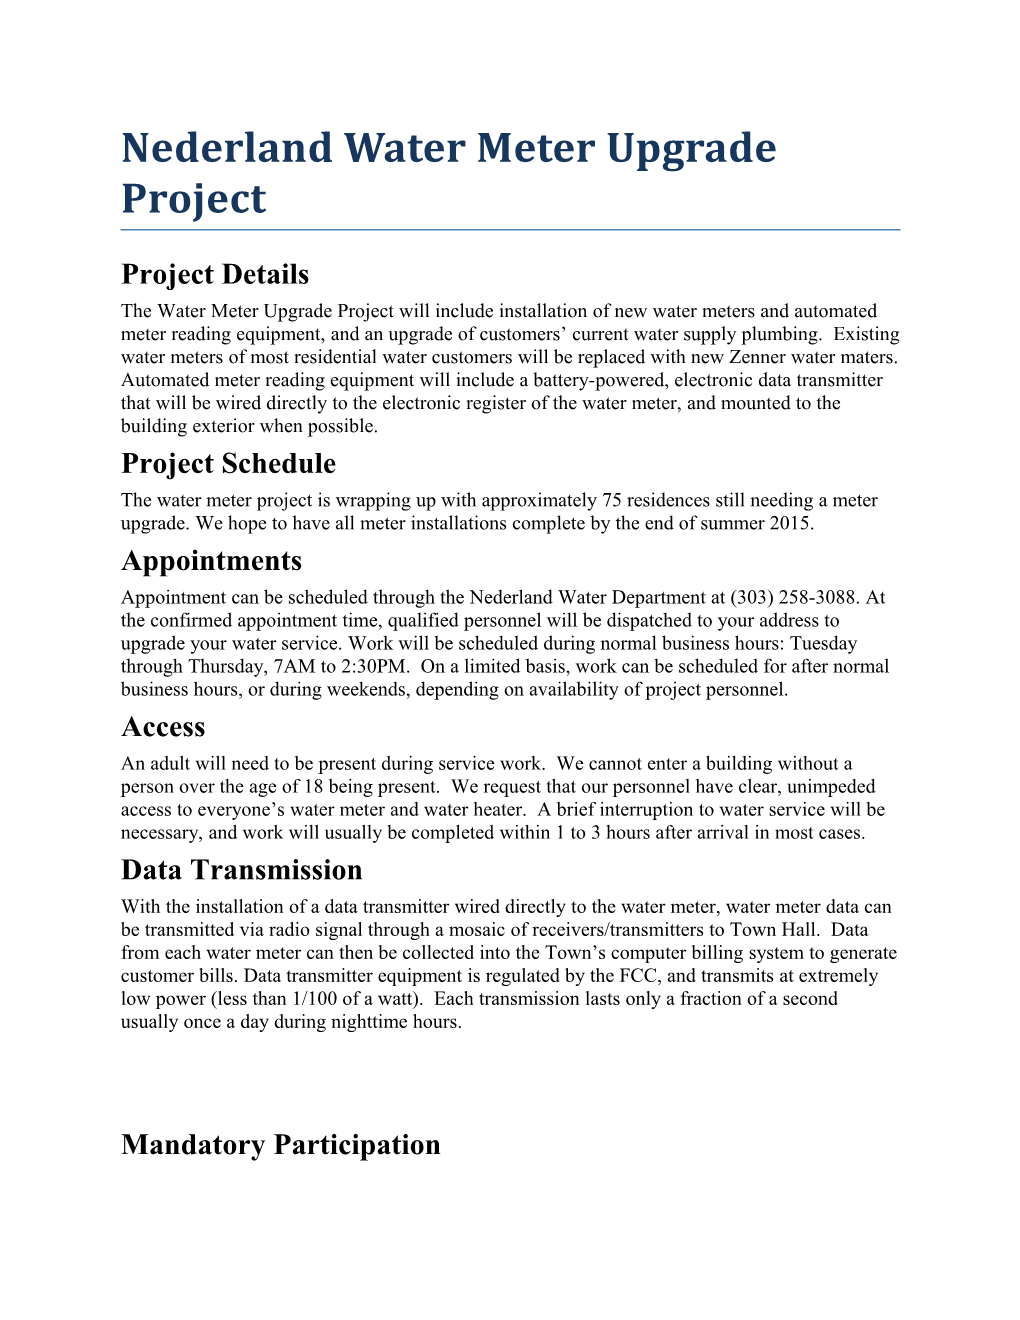 Nederland Water Meter Upgrade Project